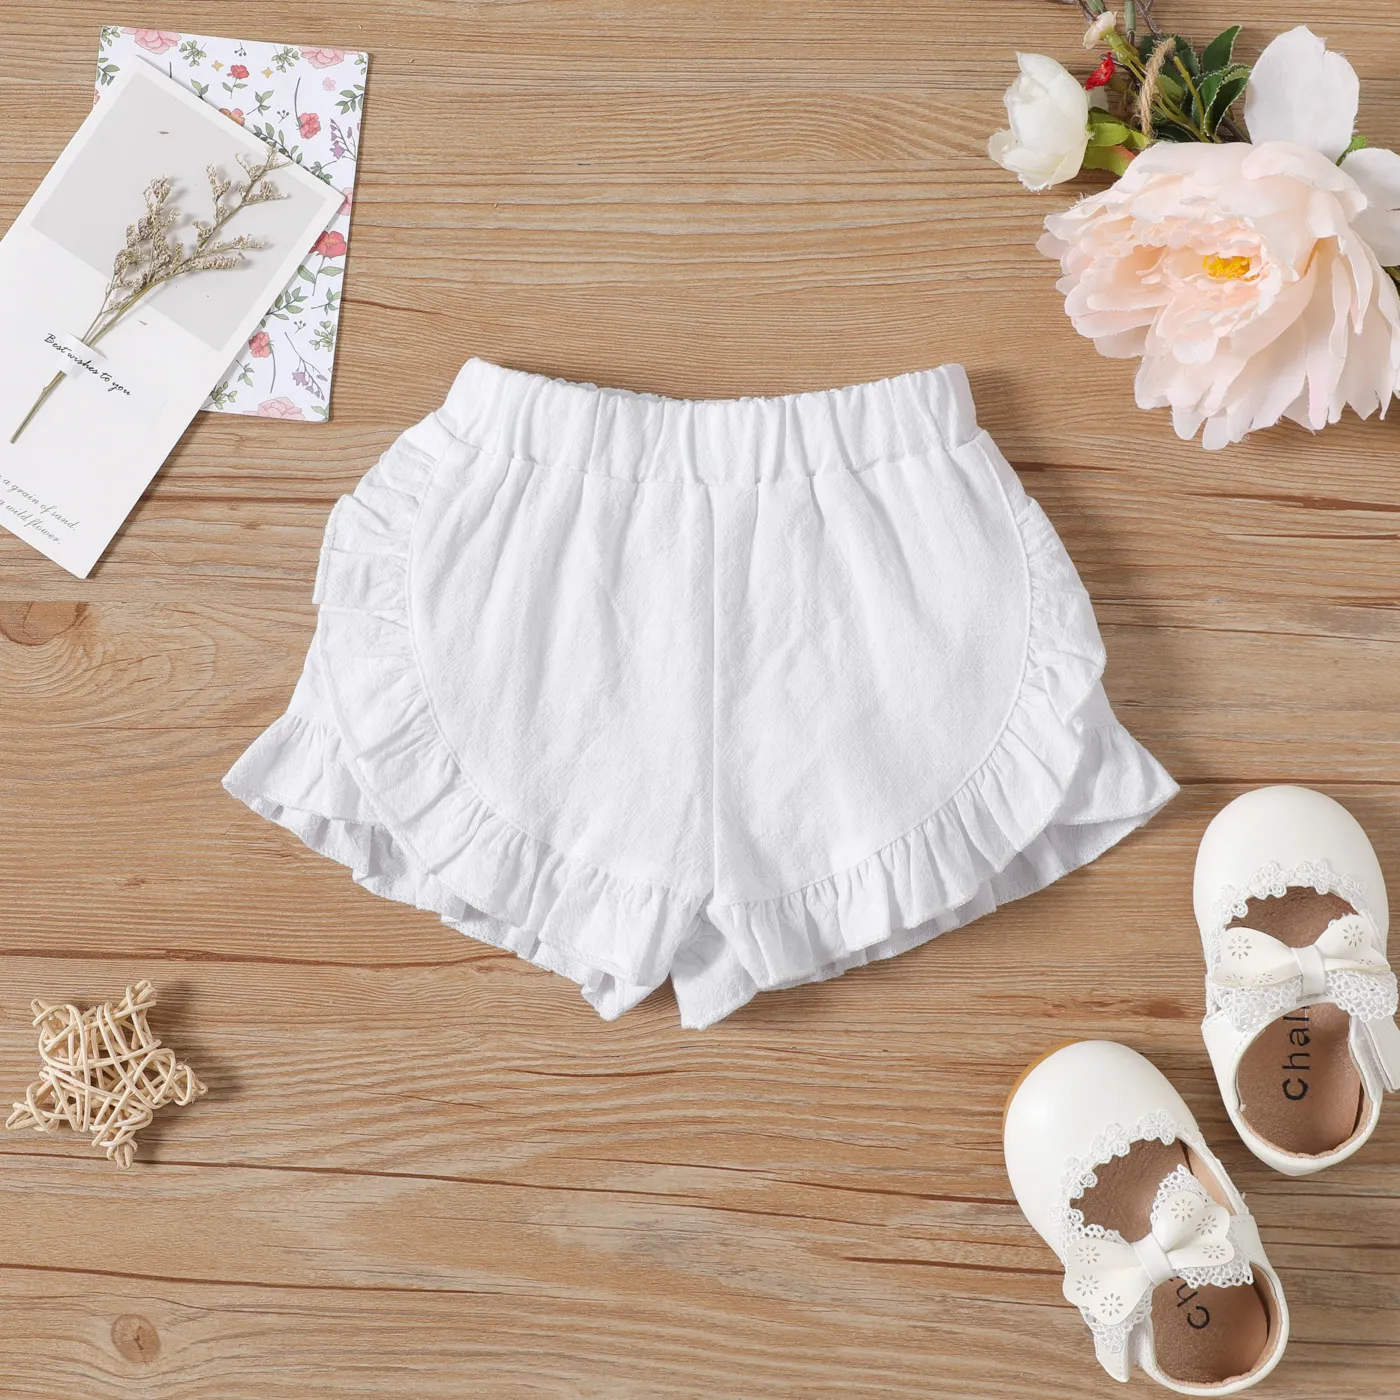 Baby Girl 100% Cotton Solid Ruffle Trim Shorts